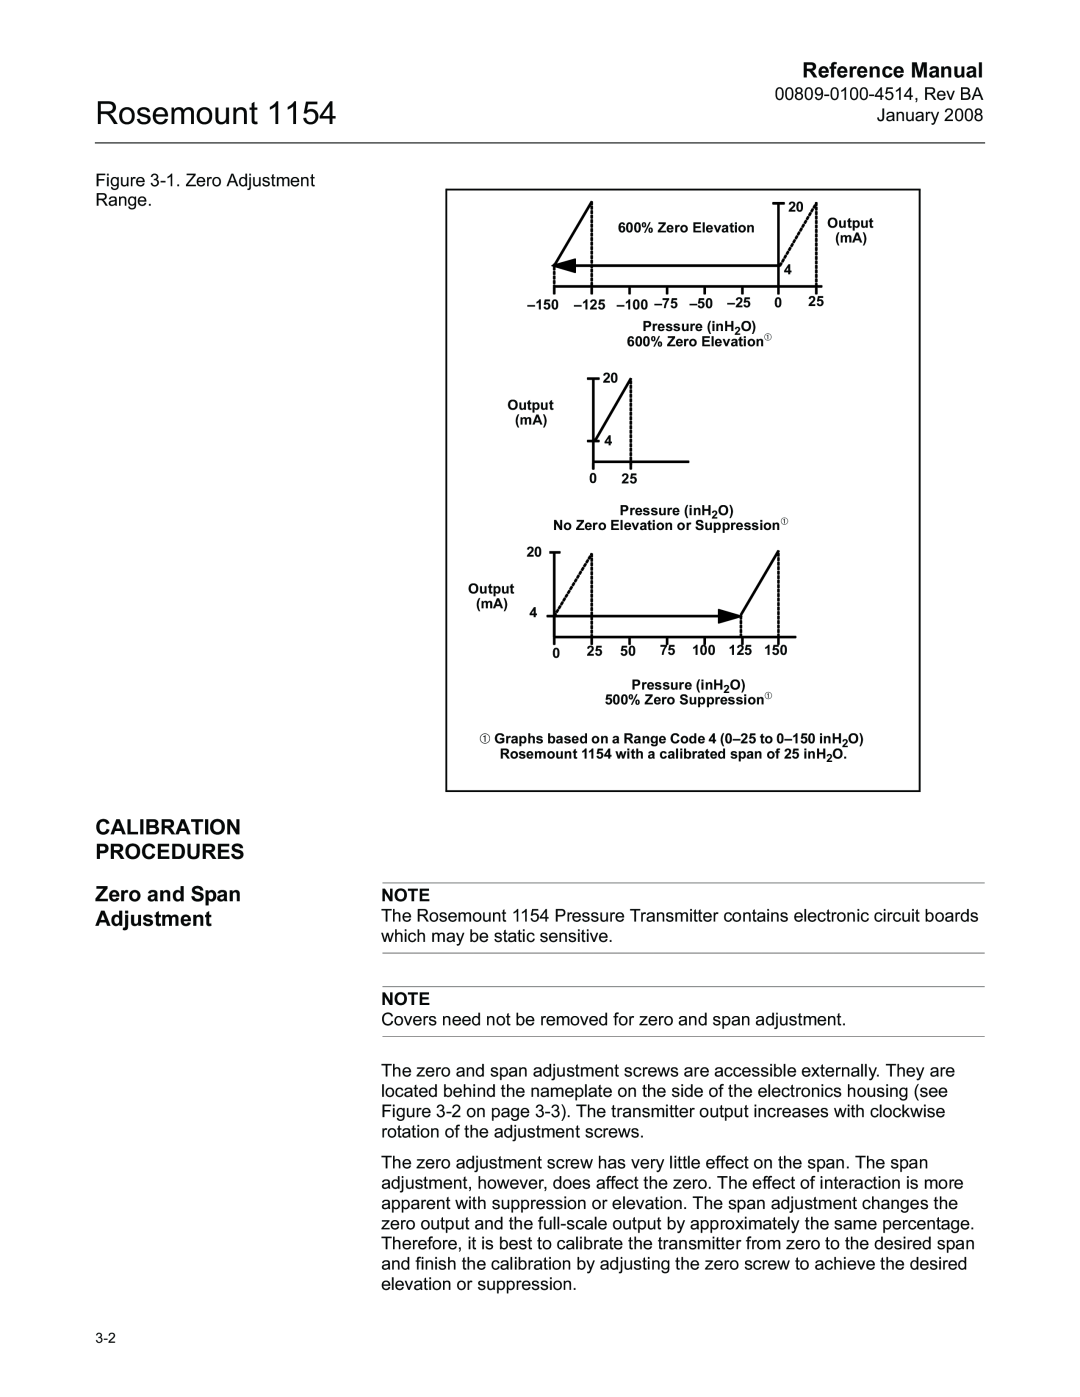 Emerson 00809-0100-4514, 1154 manual CALIBRATION PROCEDURES Zero and Span Adjustment, Rosemount, Reference Manual 